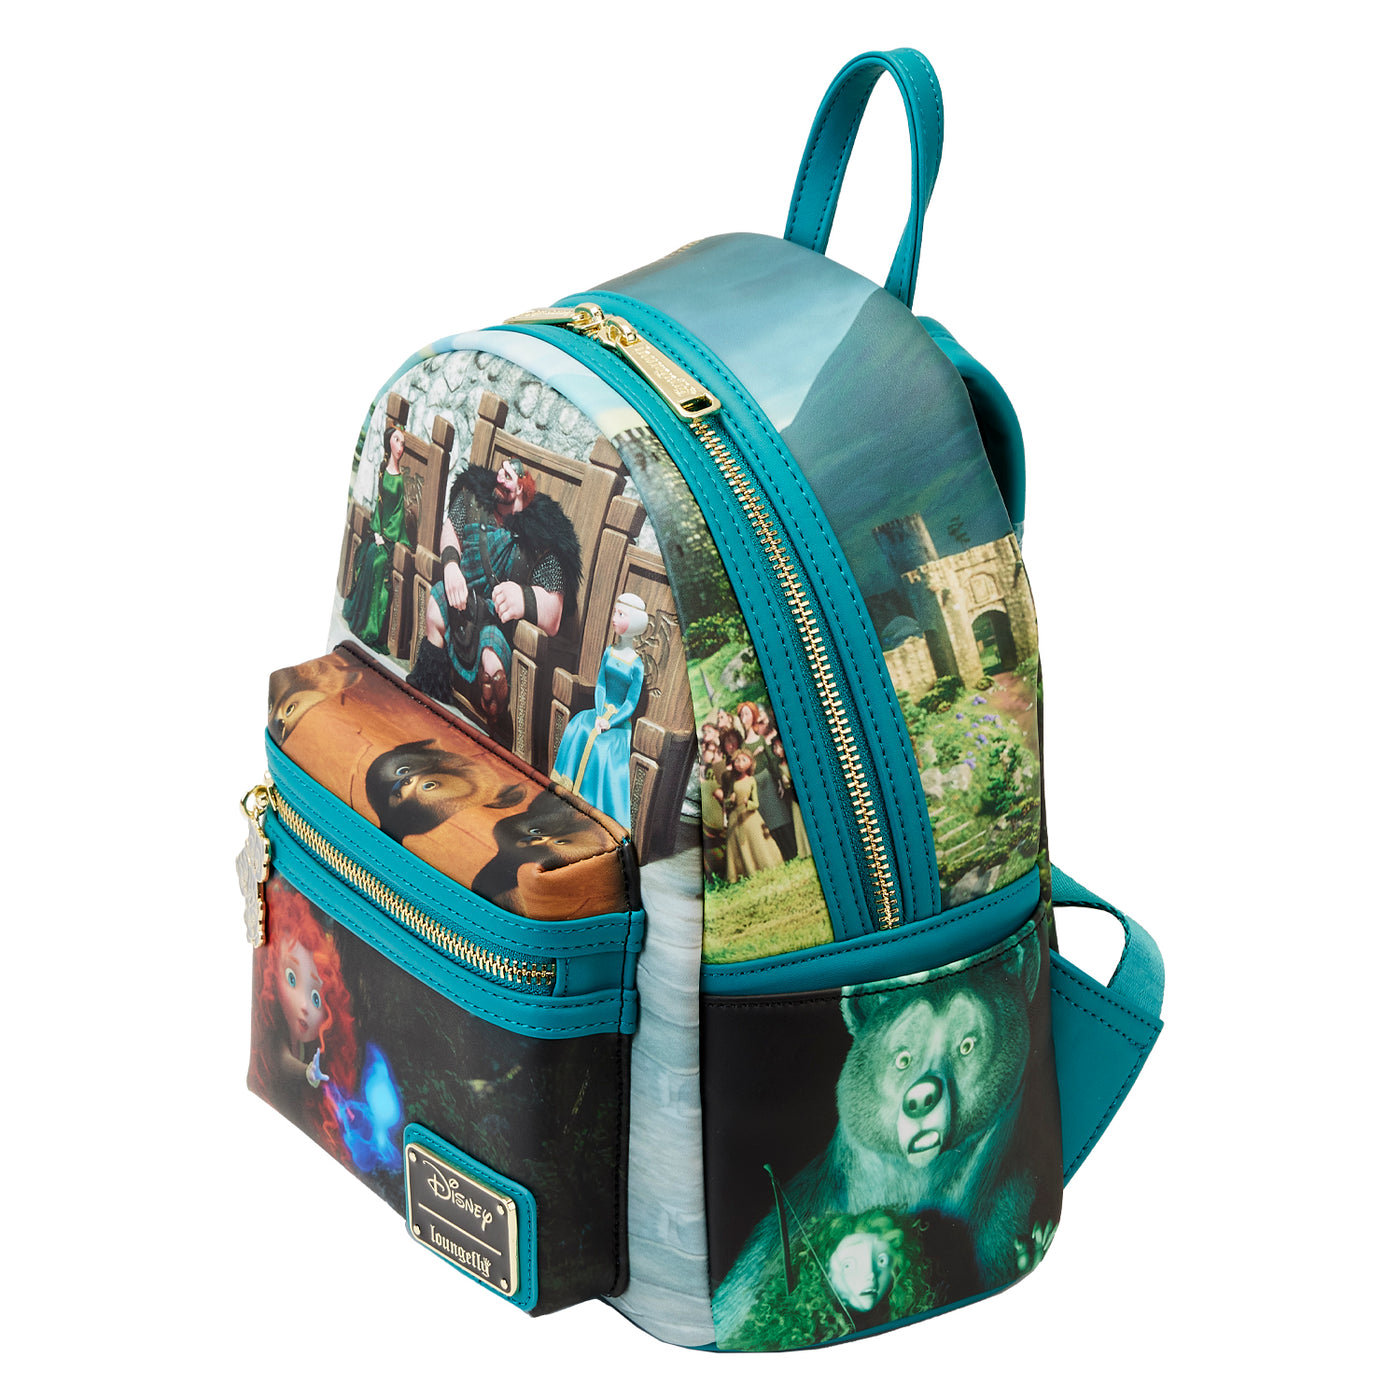 Disney Pixar Brave Merida Princess Scenes Mini Backpack